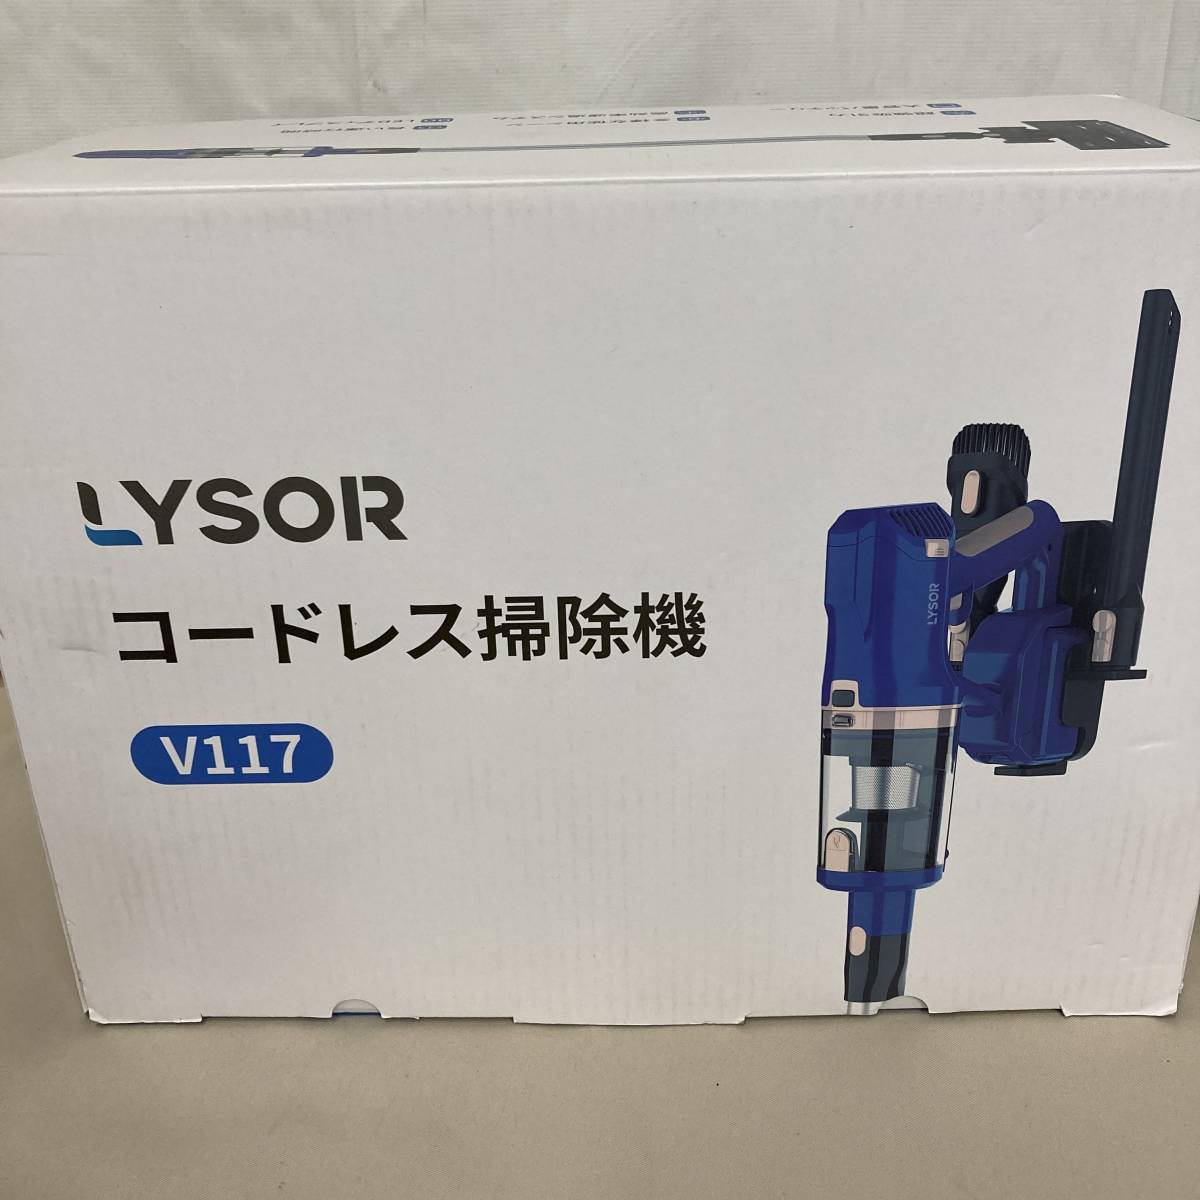 LYSOR コードレス掃除機 V117 30000Pa吸引力 掃除機 スティッククリーナー/S1314-1a_画像9